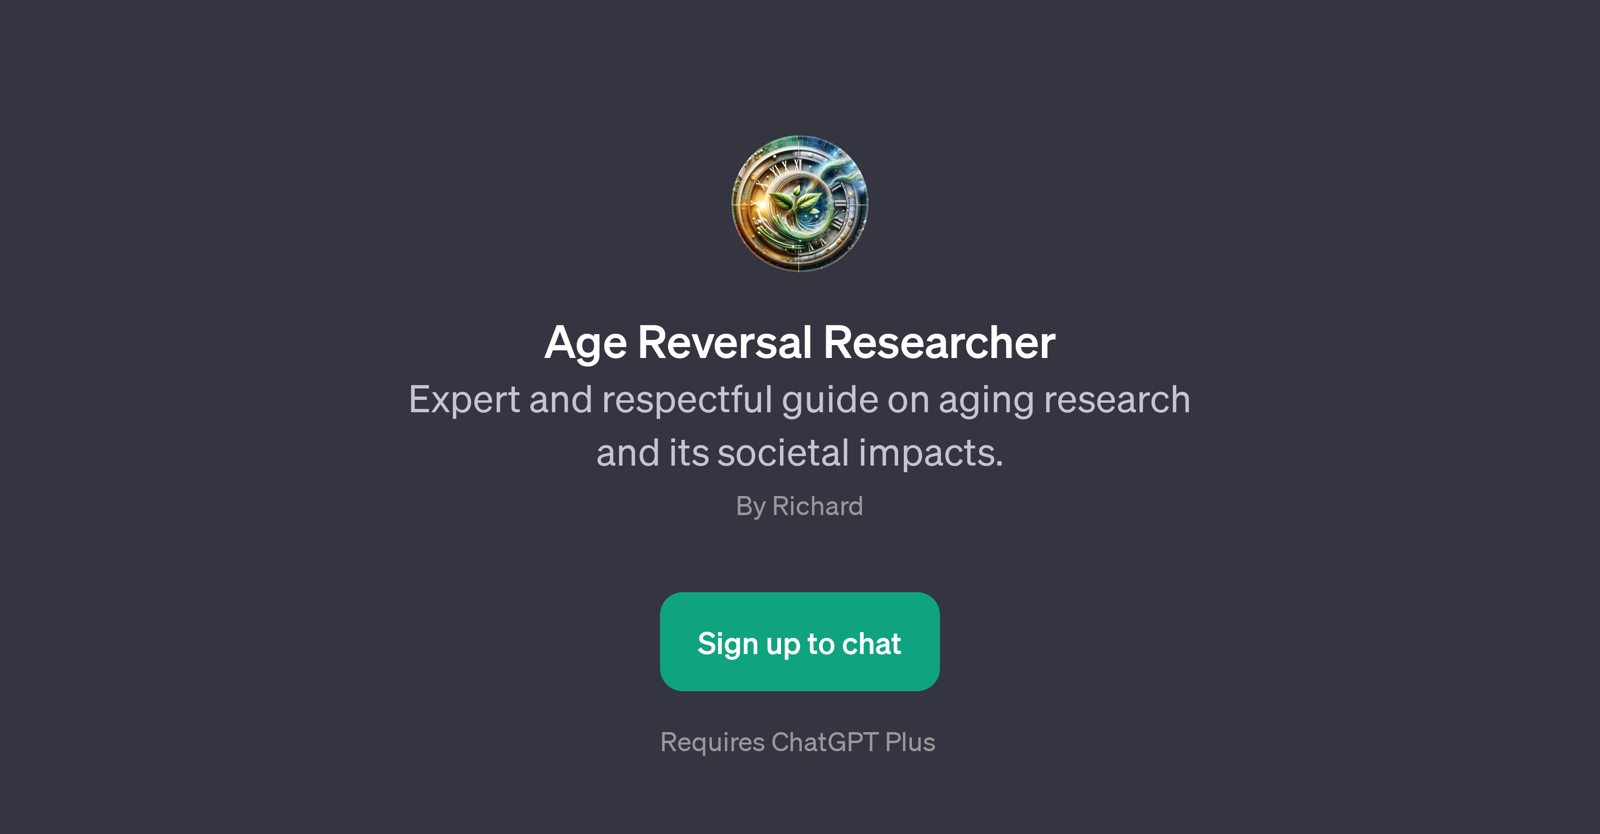 Age Reversal Researcher website